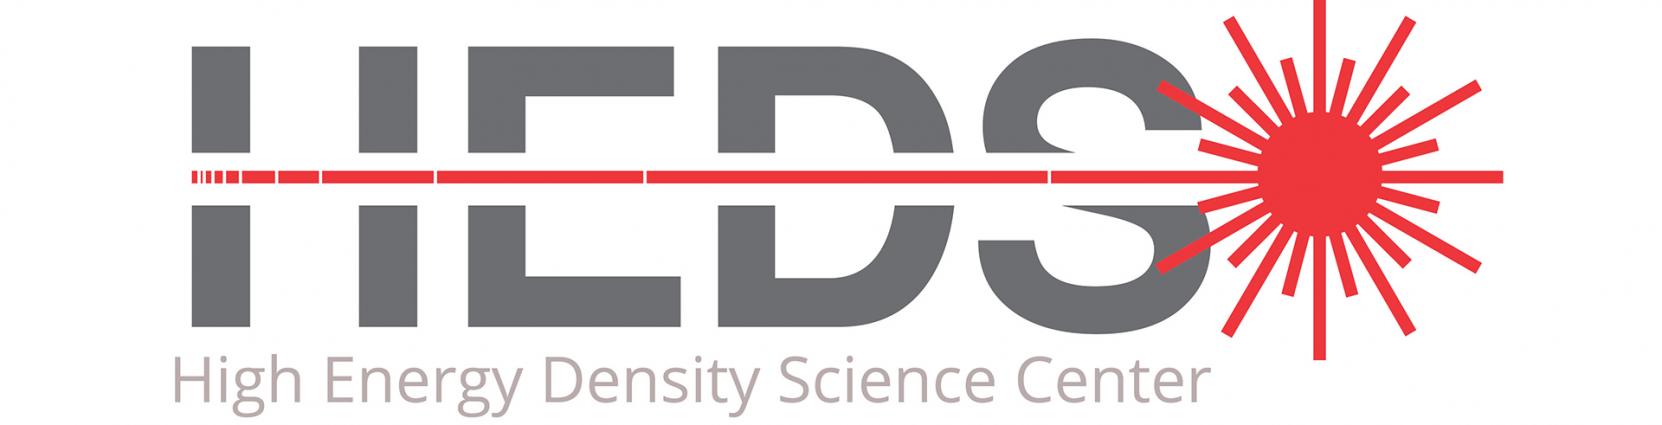 HEDS logo